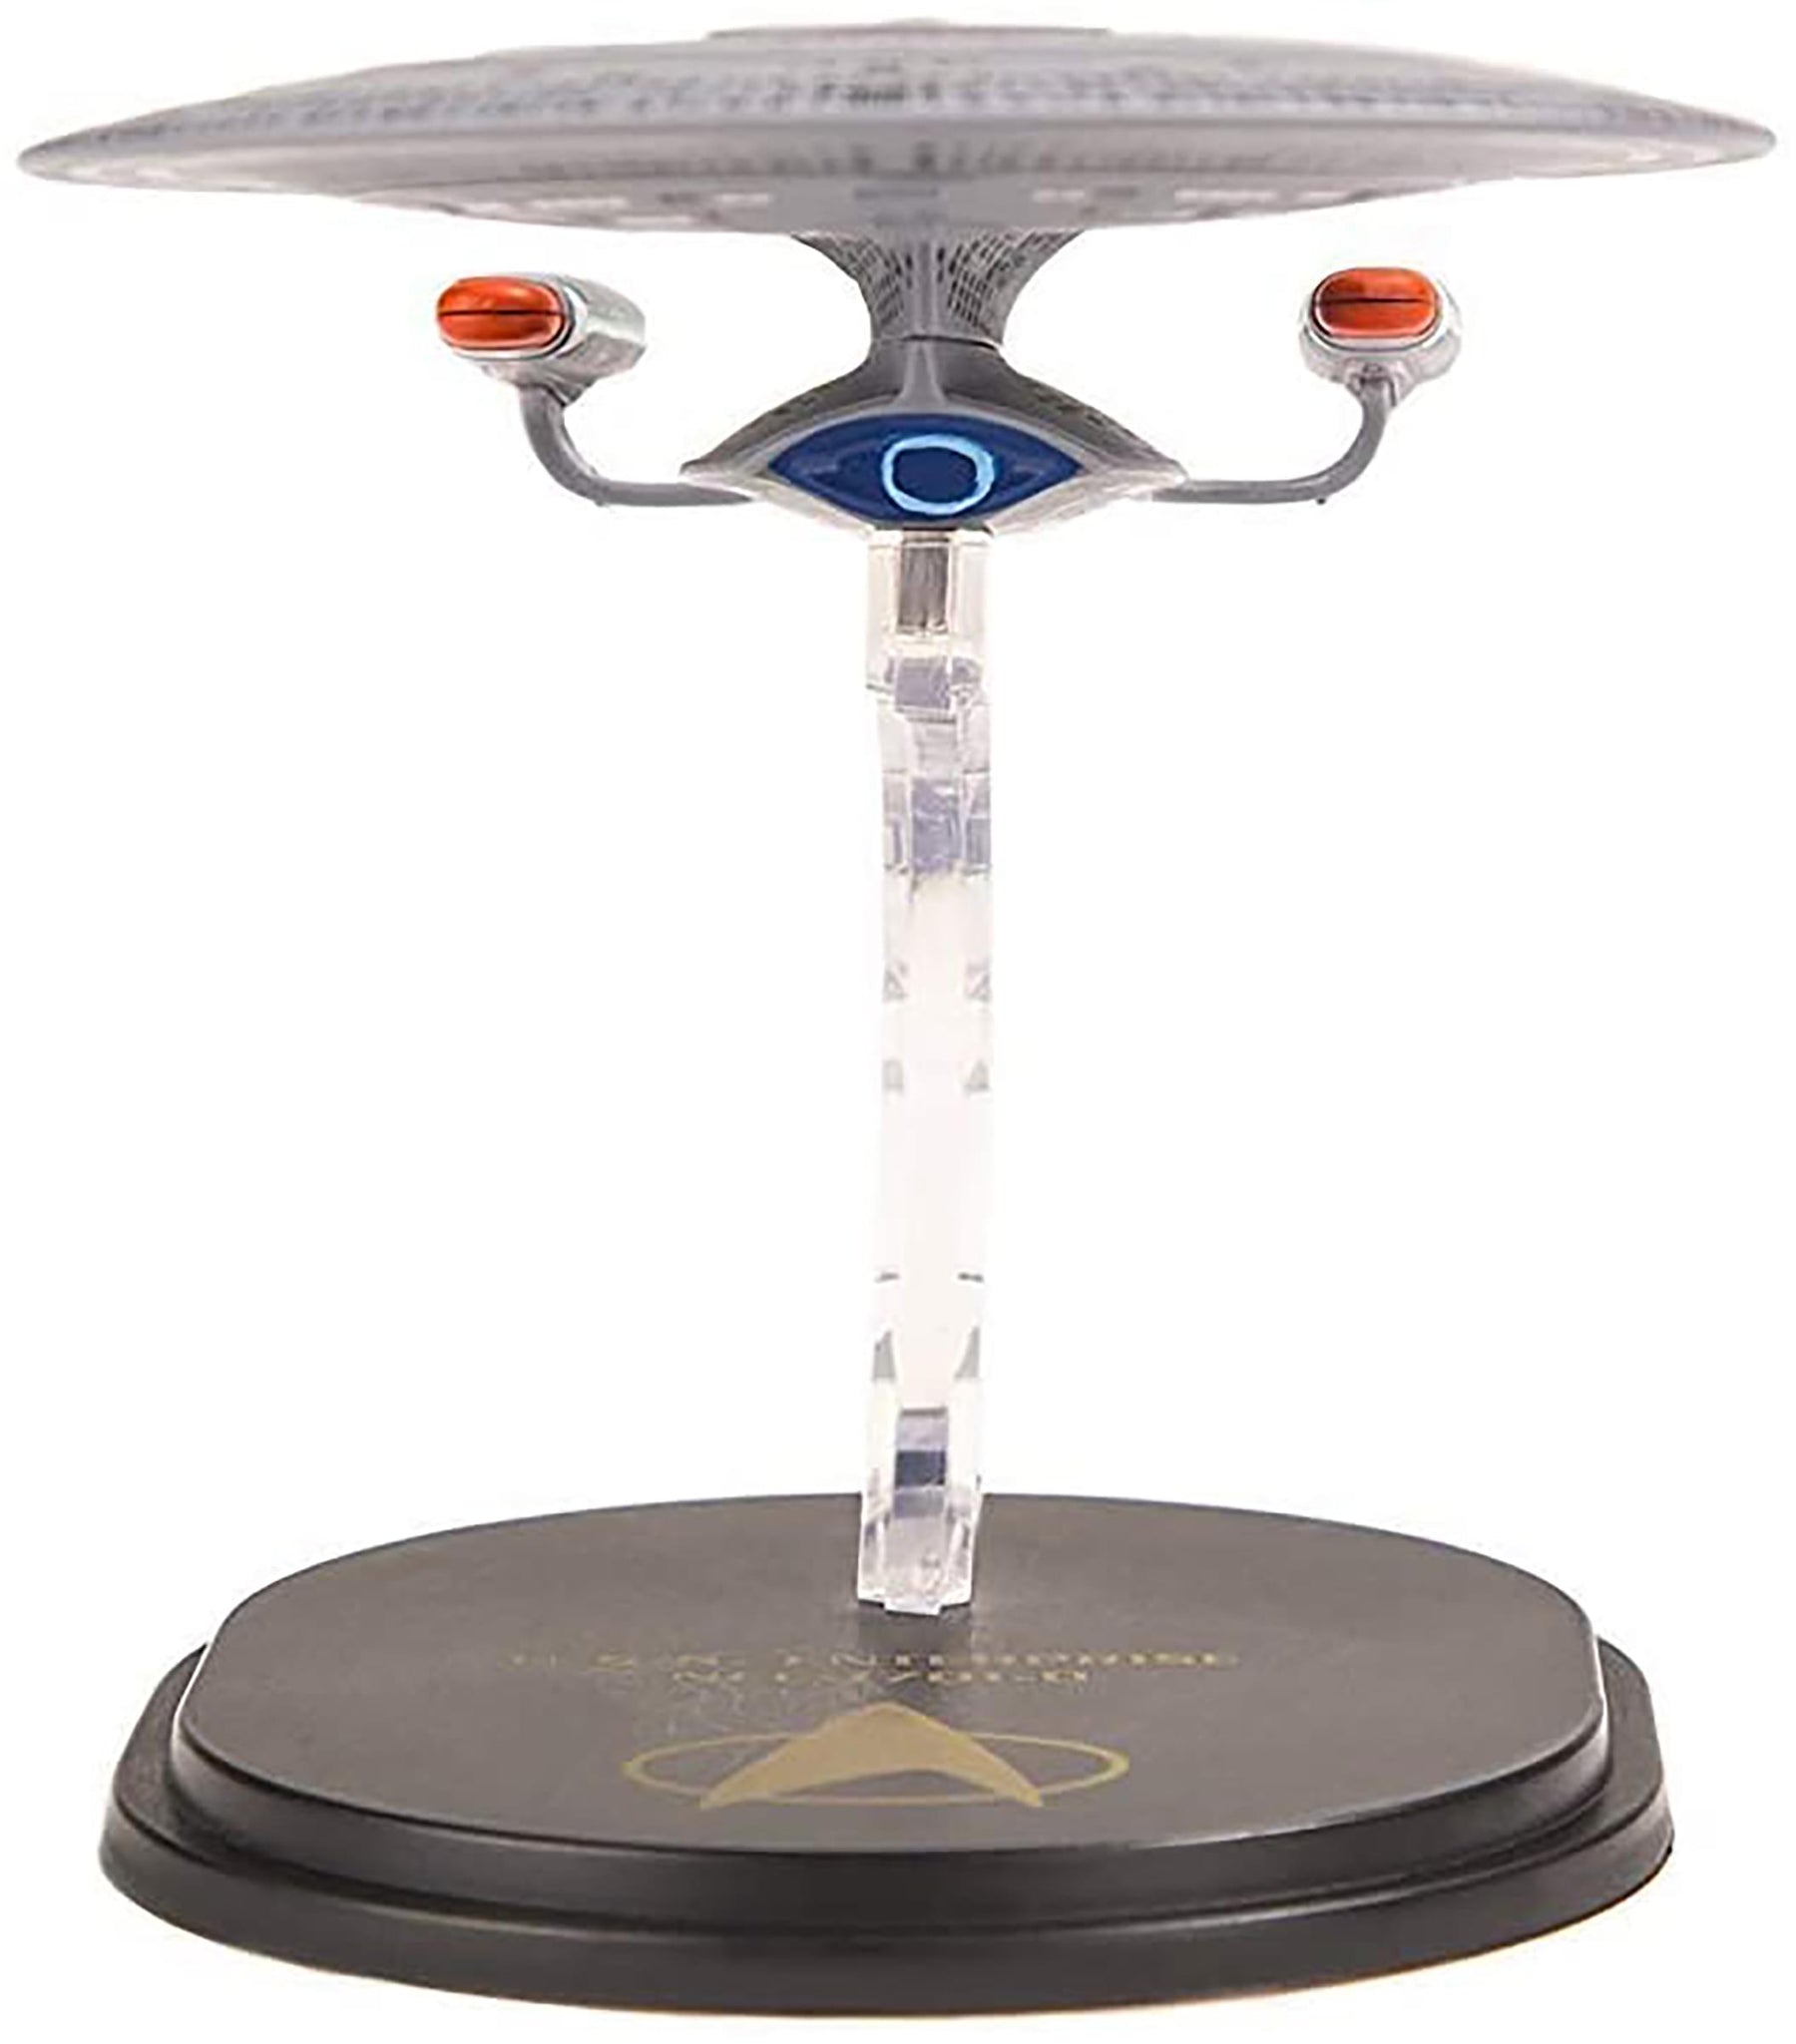 Star Trek The Next Generation U.S.S. Enterprise NCC-1701-D Mini Master Replica